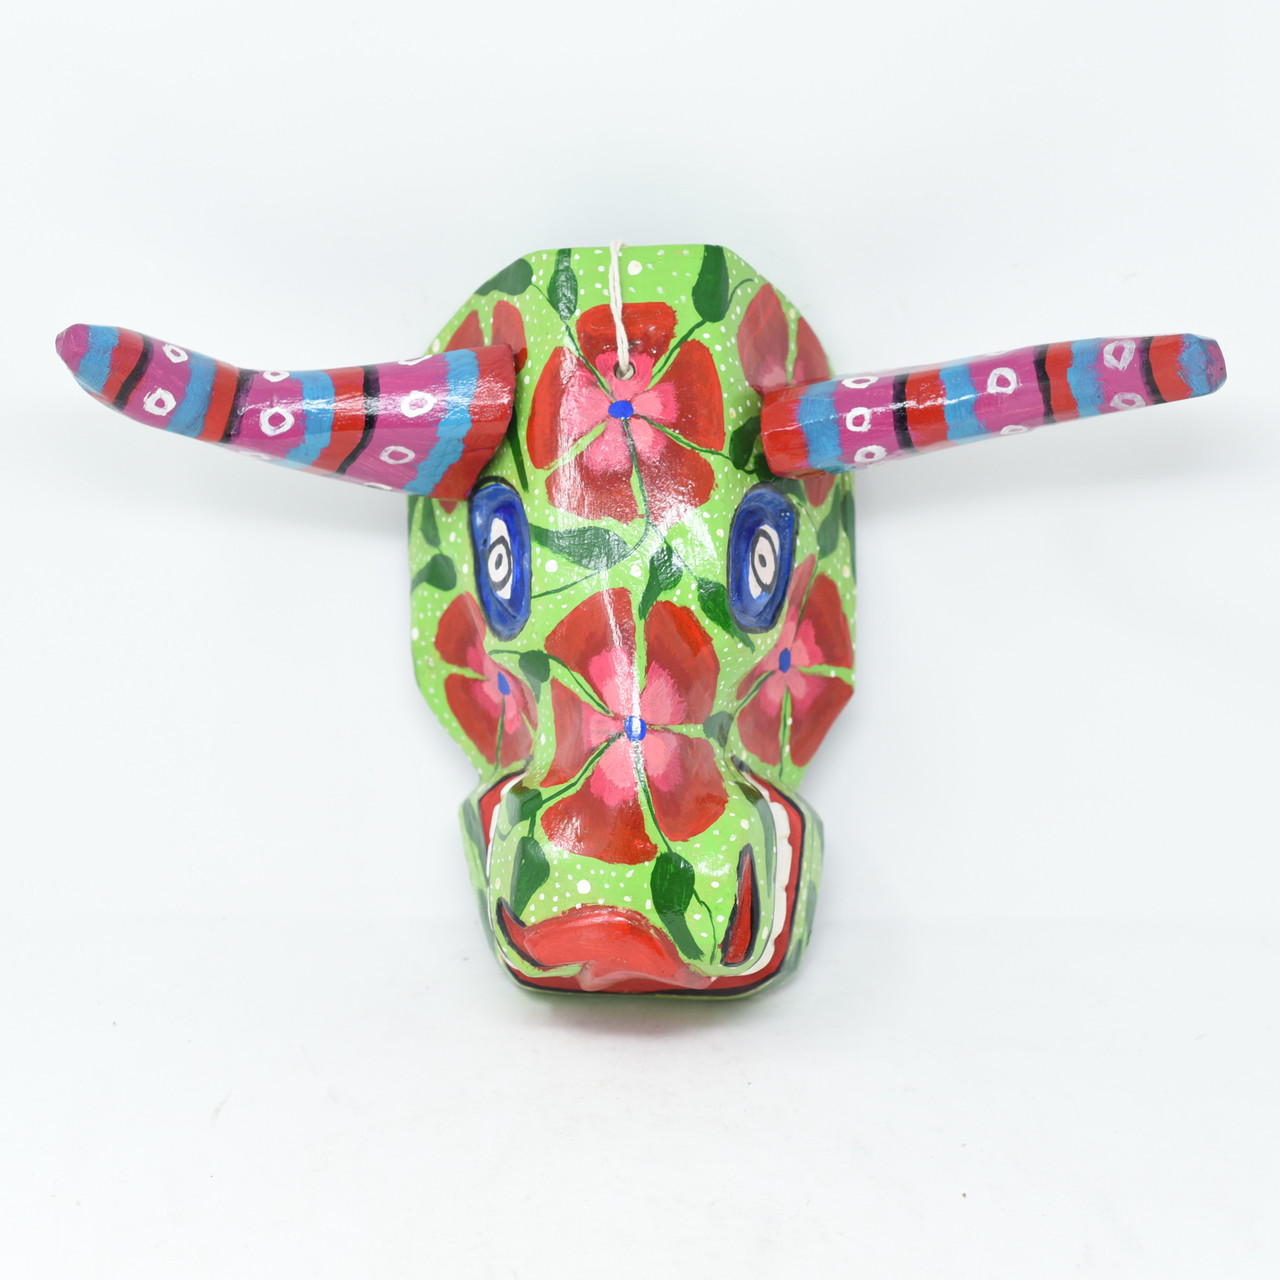 Green Colorful Bull Mask, Whimsical Dance Mask, Hand Carved Wood Guatemala 15" x 10" x 6"